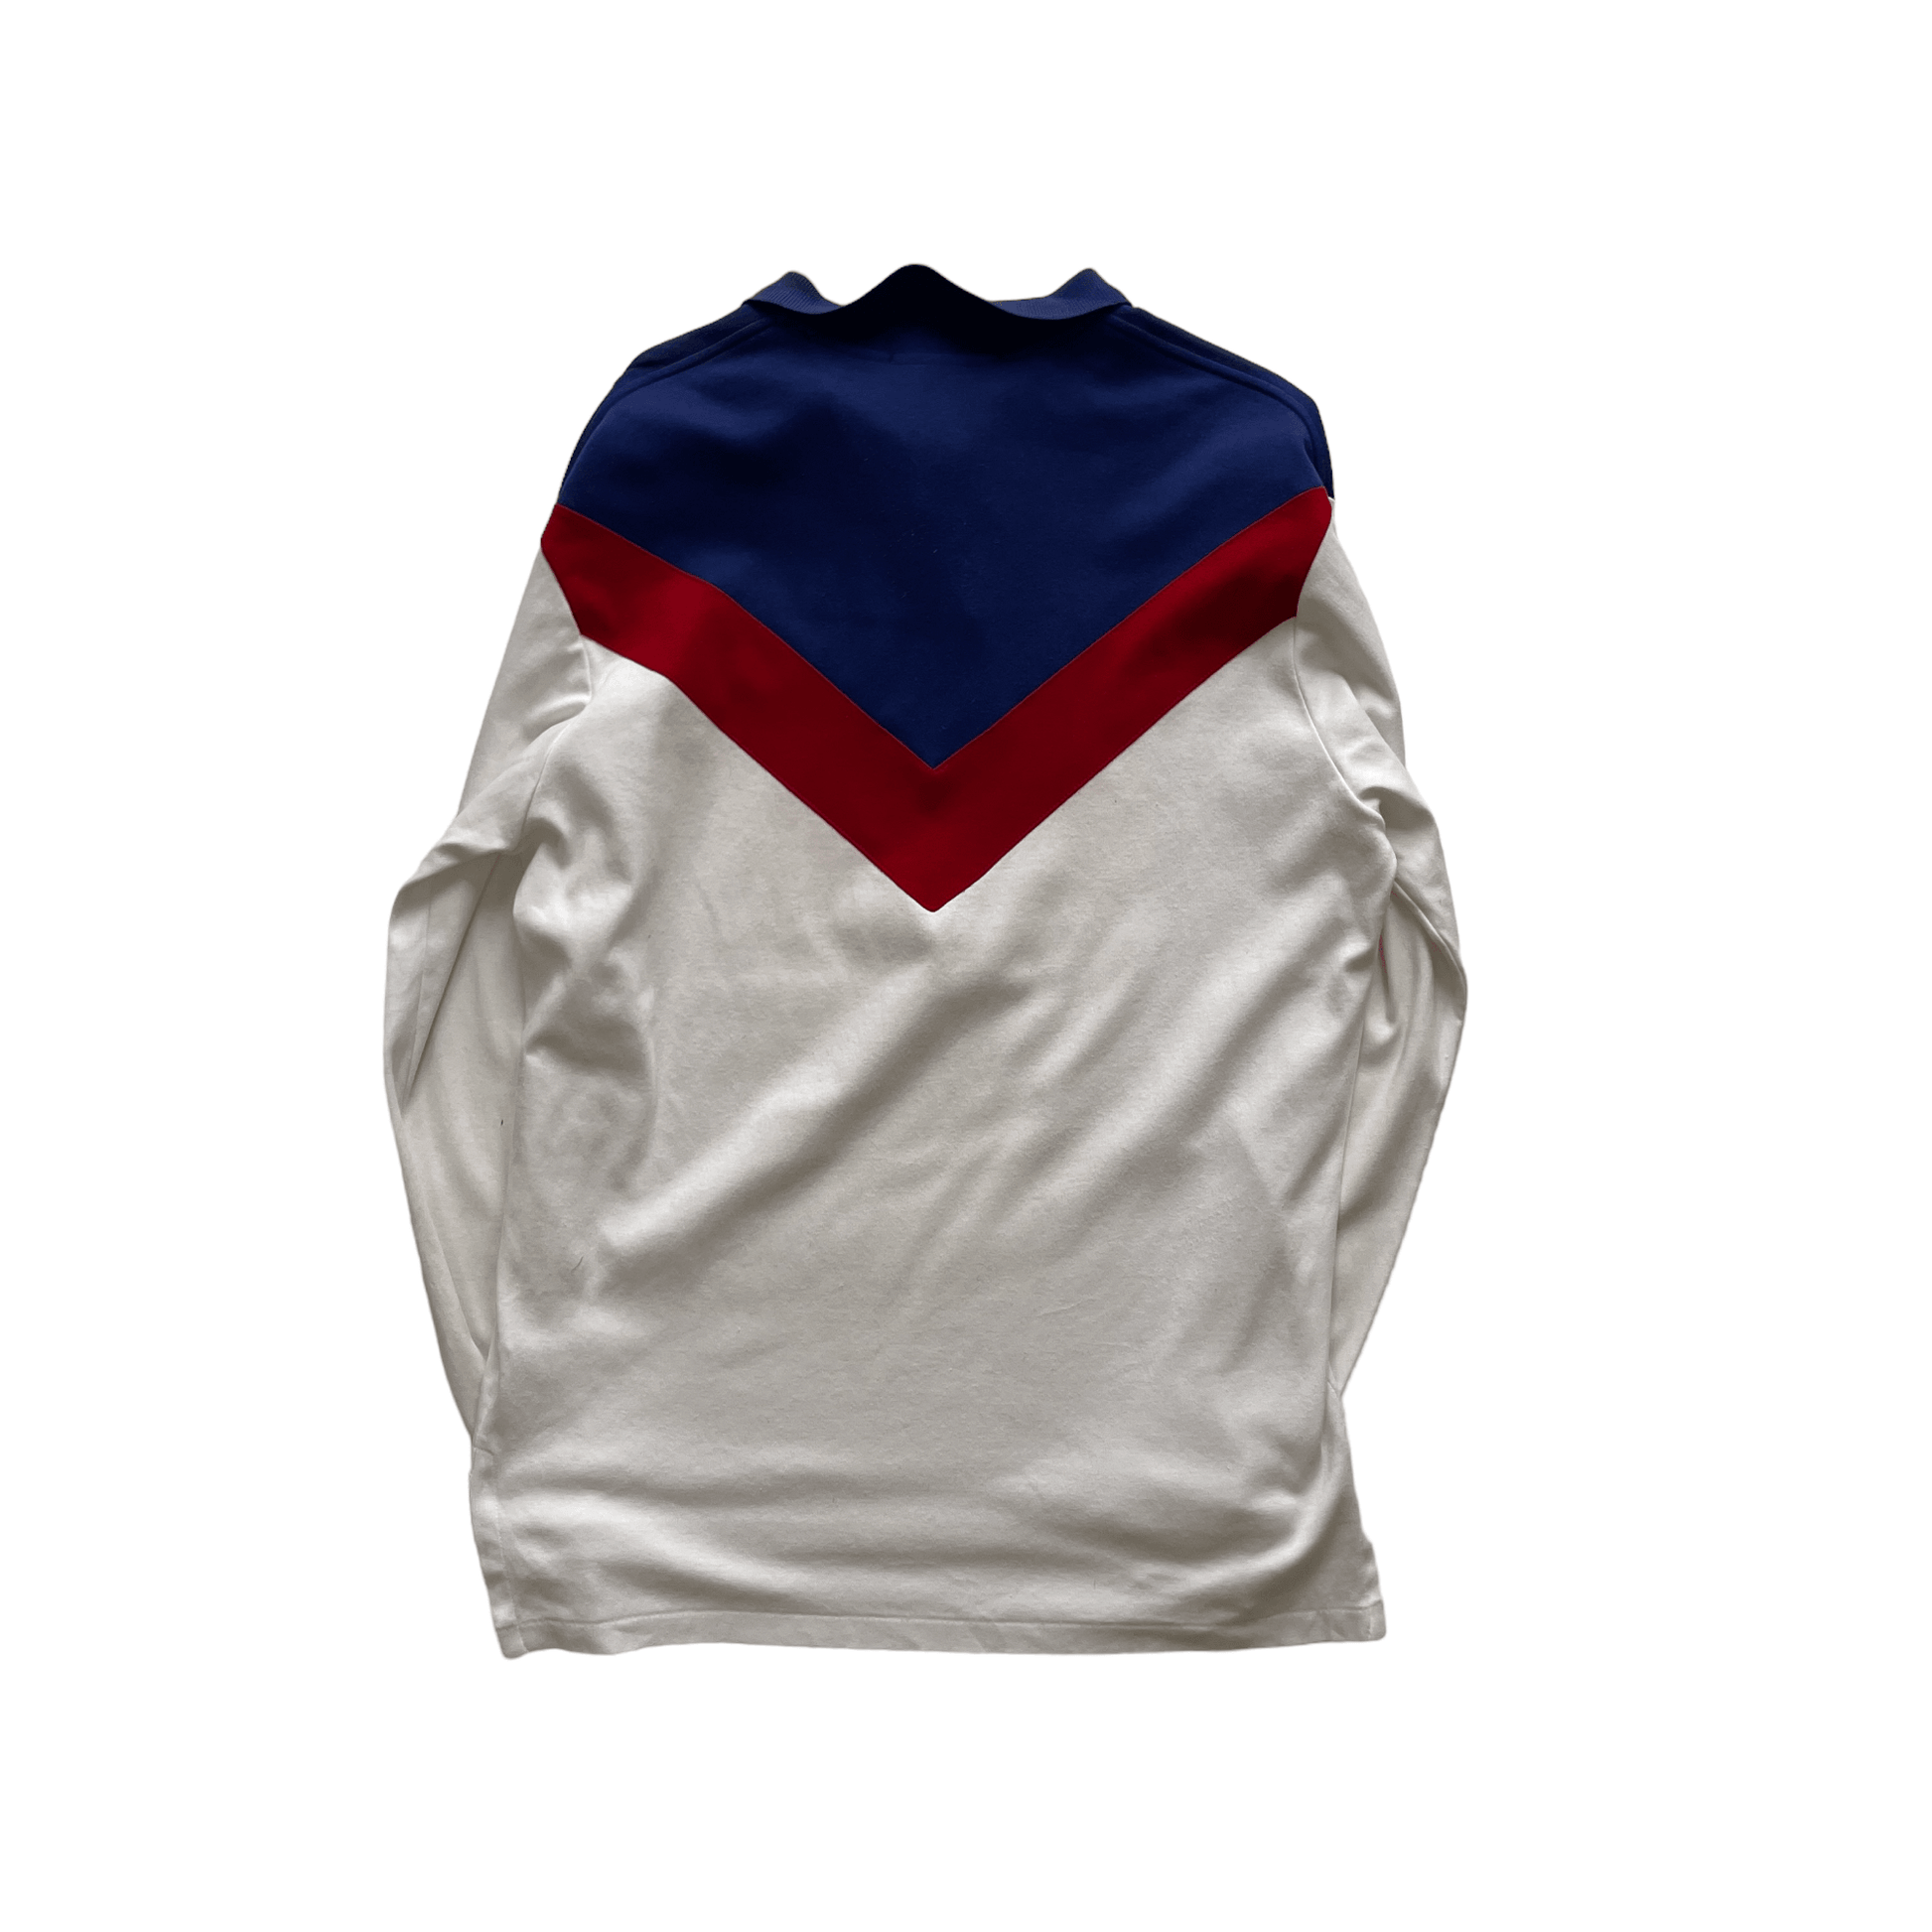 Vintage 90s White, Red + Blue Polo Ralph Lauren Suicide Ski Polo Shirt - Medium - The Streetwear Studio